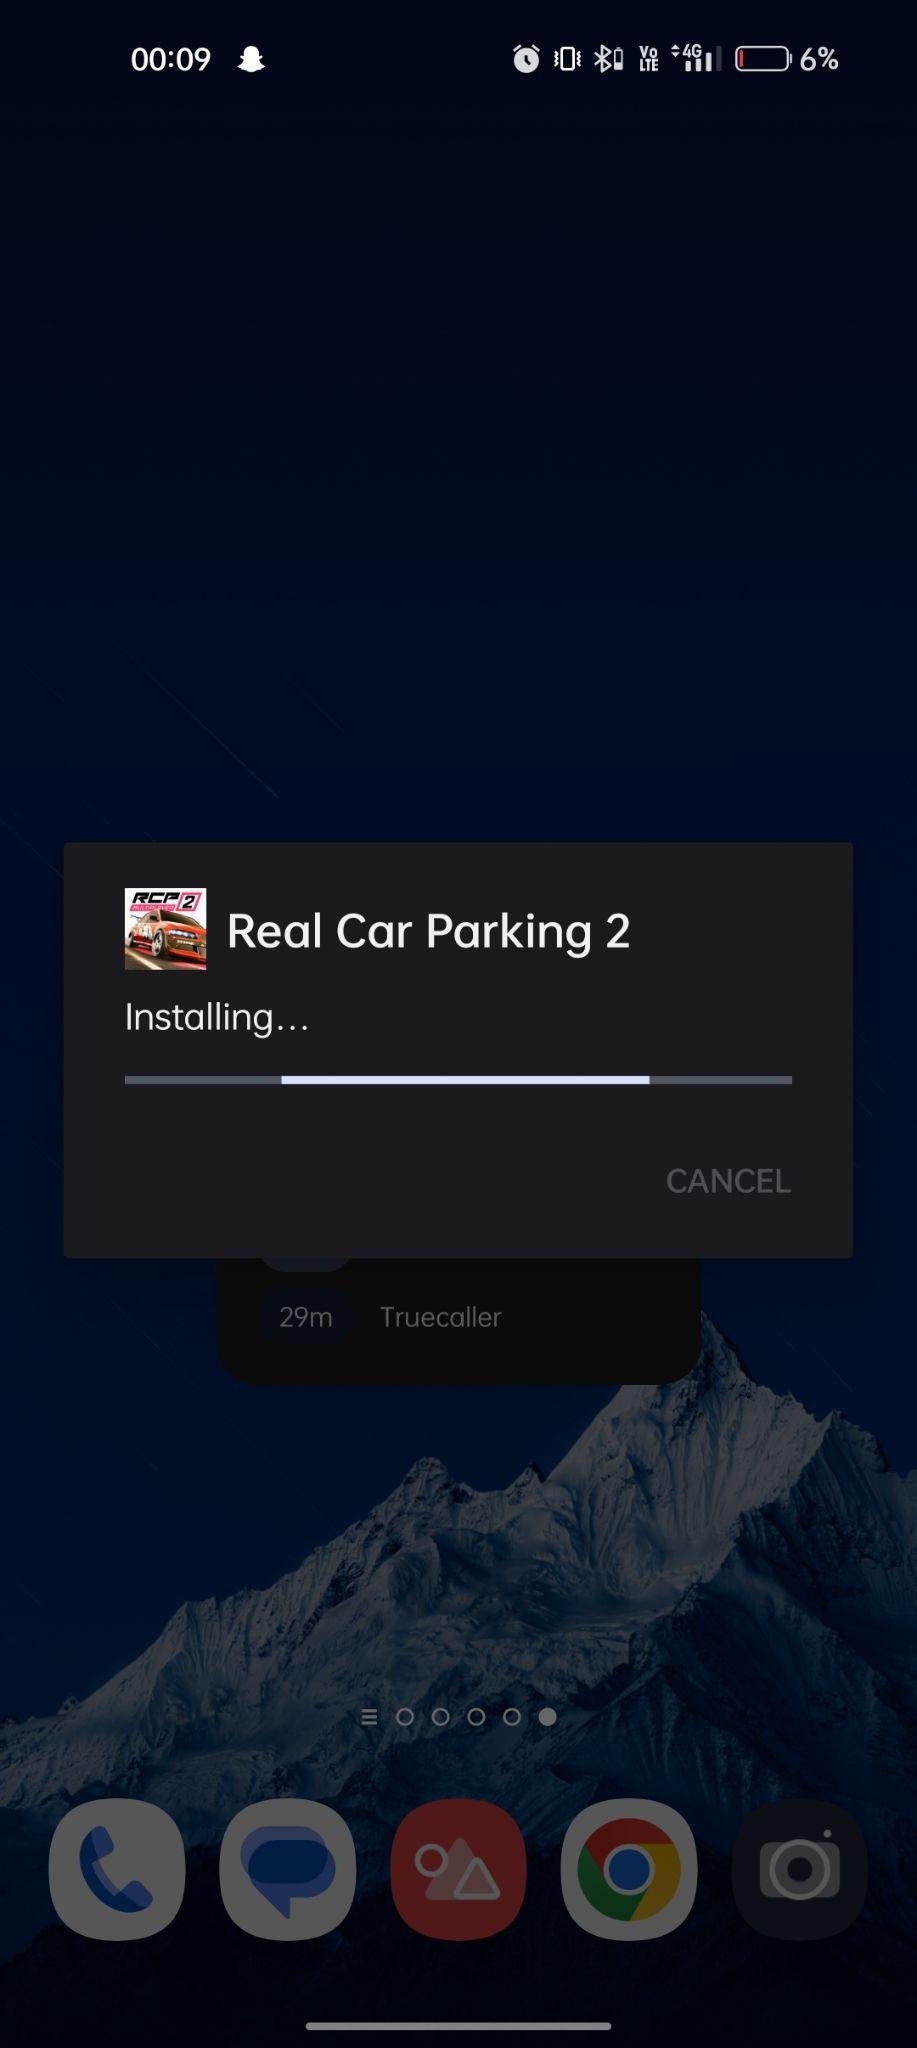 Real Car Parking 2 apk installing